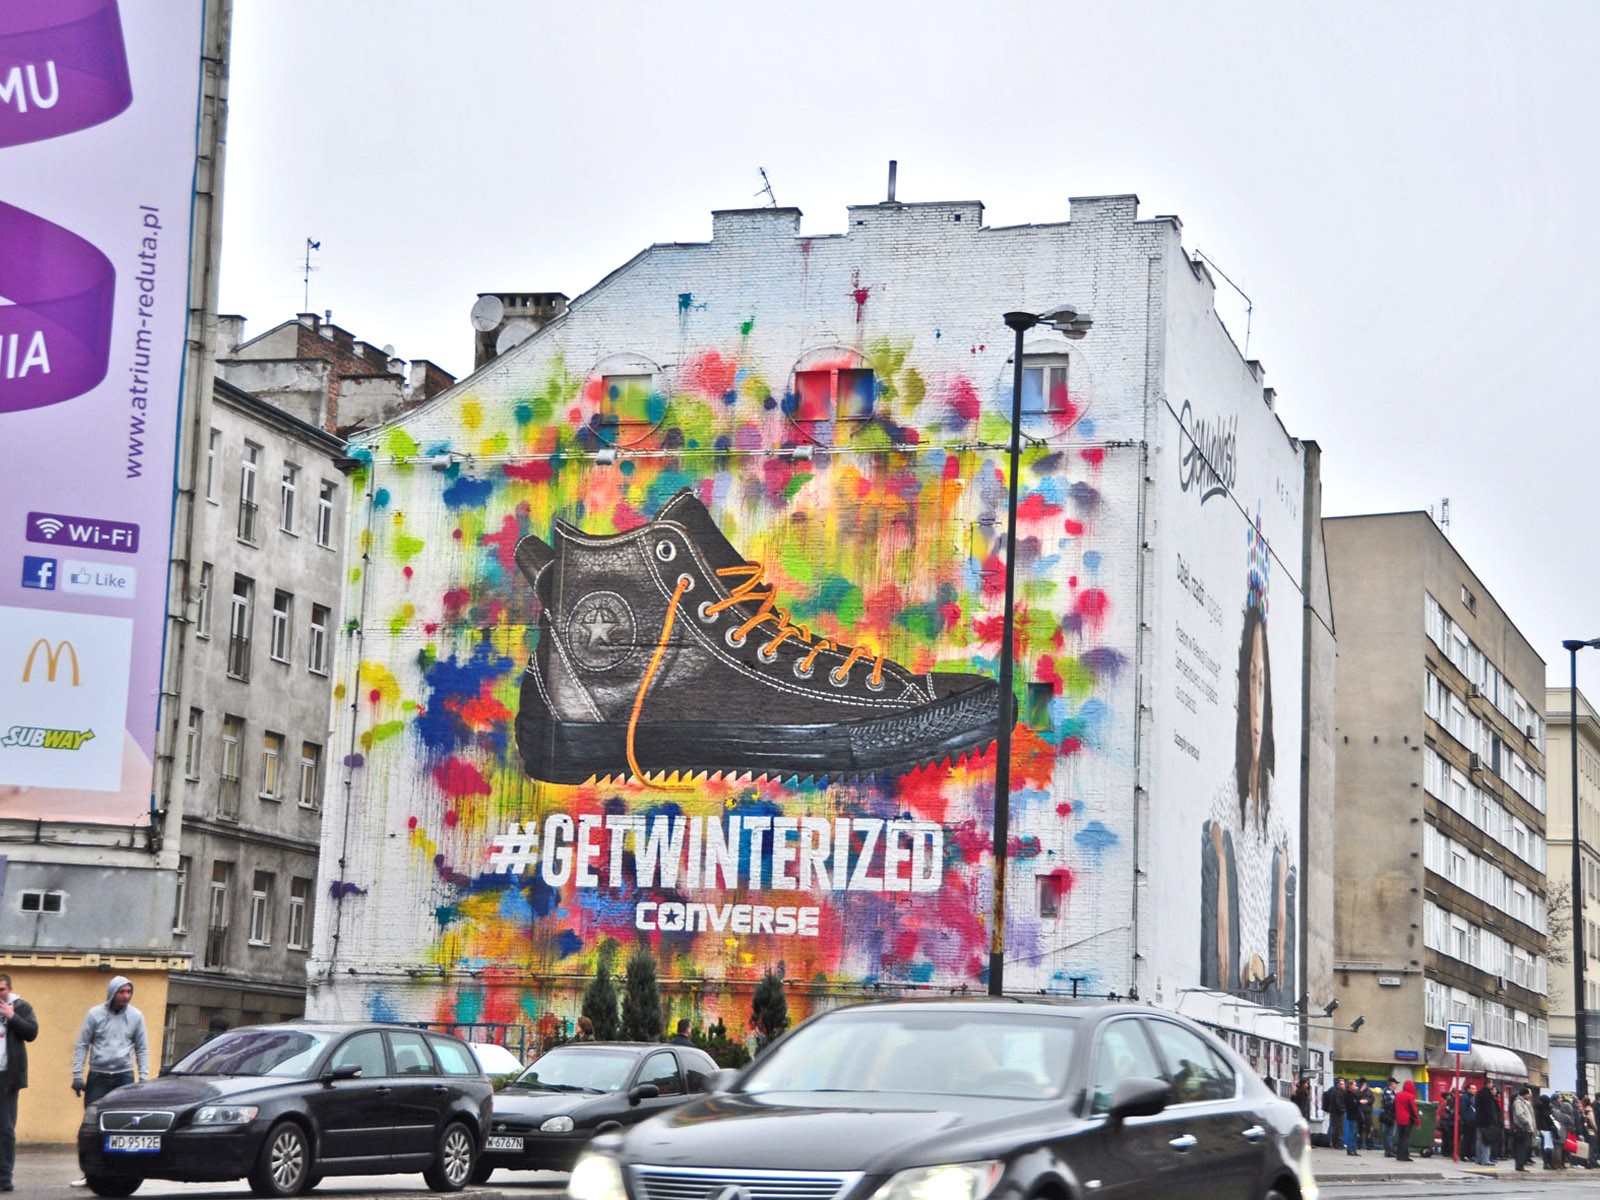 Advertising mural Converse getwinterized - Warsaw Polna 40 street | #getwinterized | Portfolio